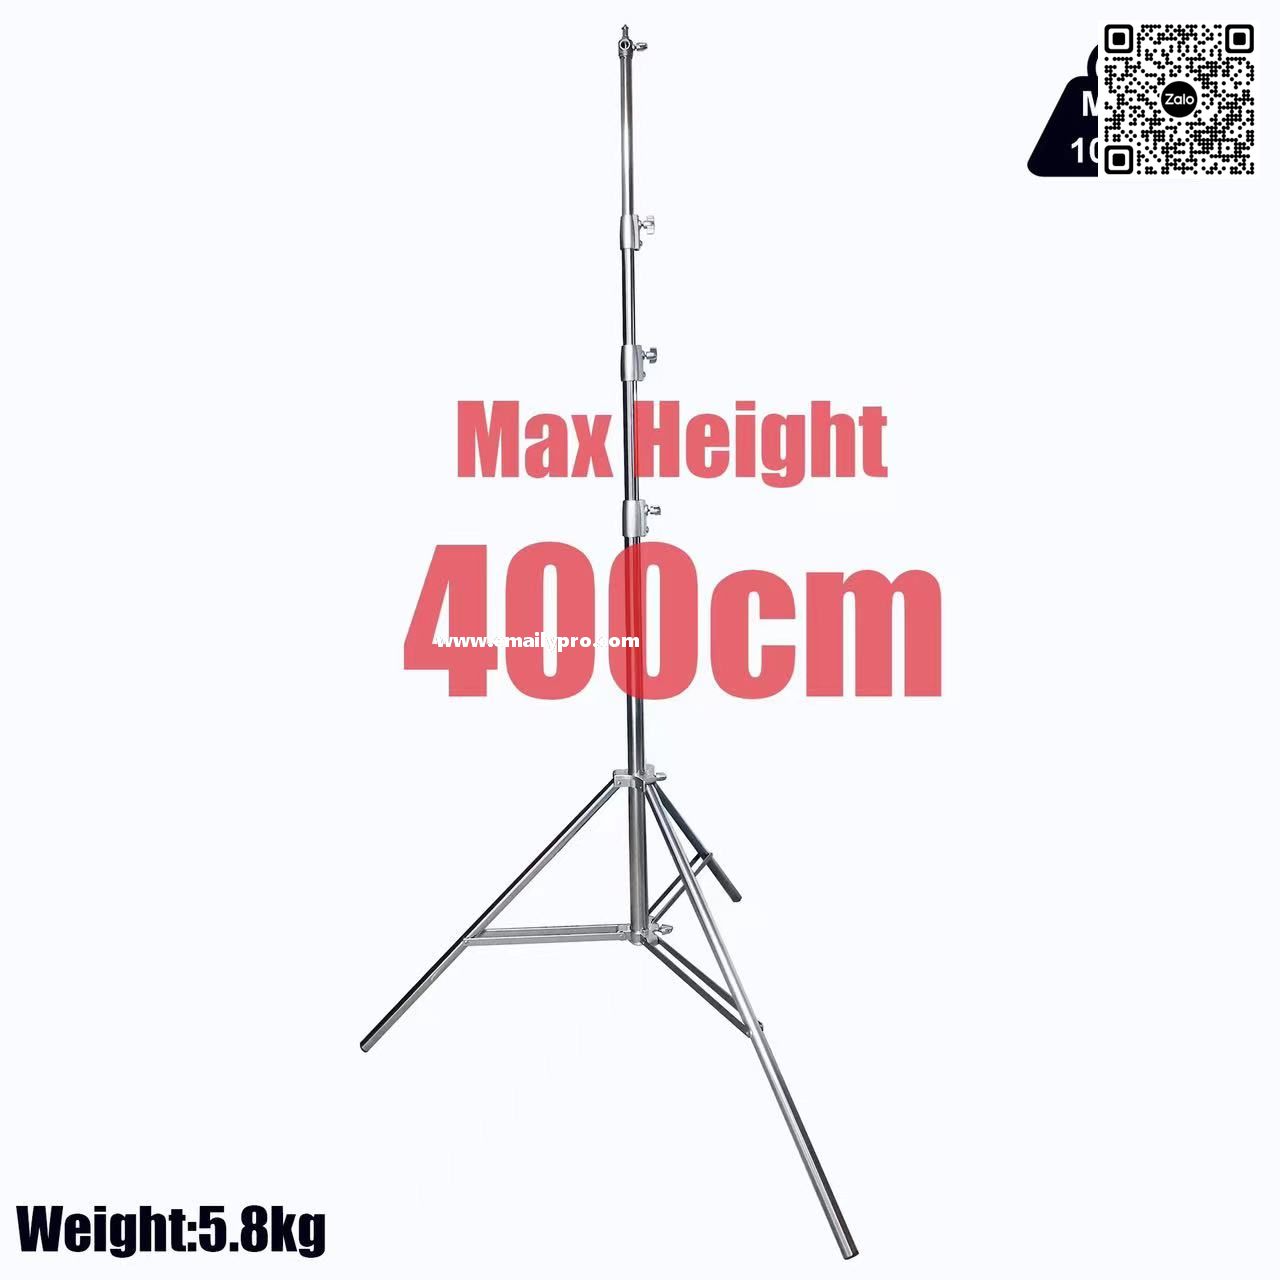 Light Stand Qihe J388S 122cm - 400cm 